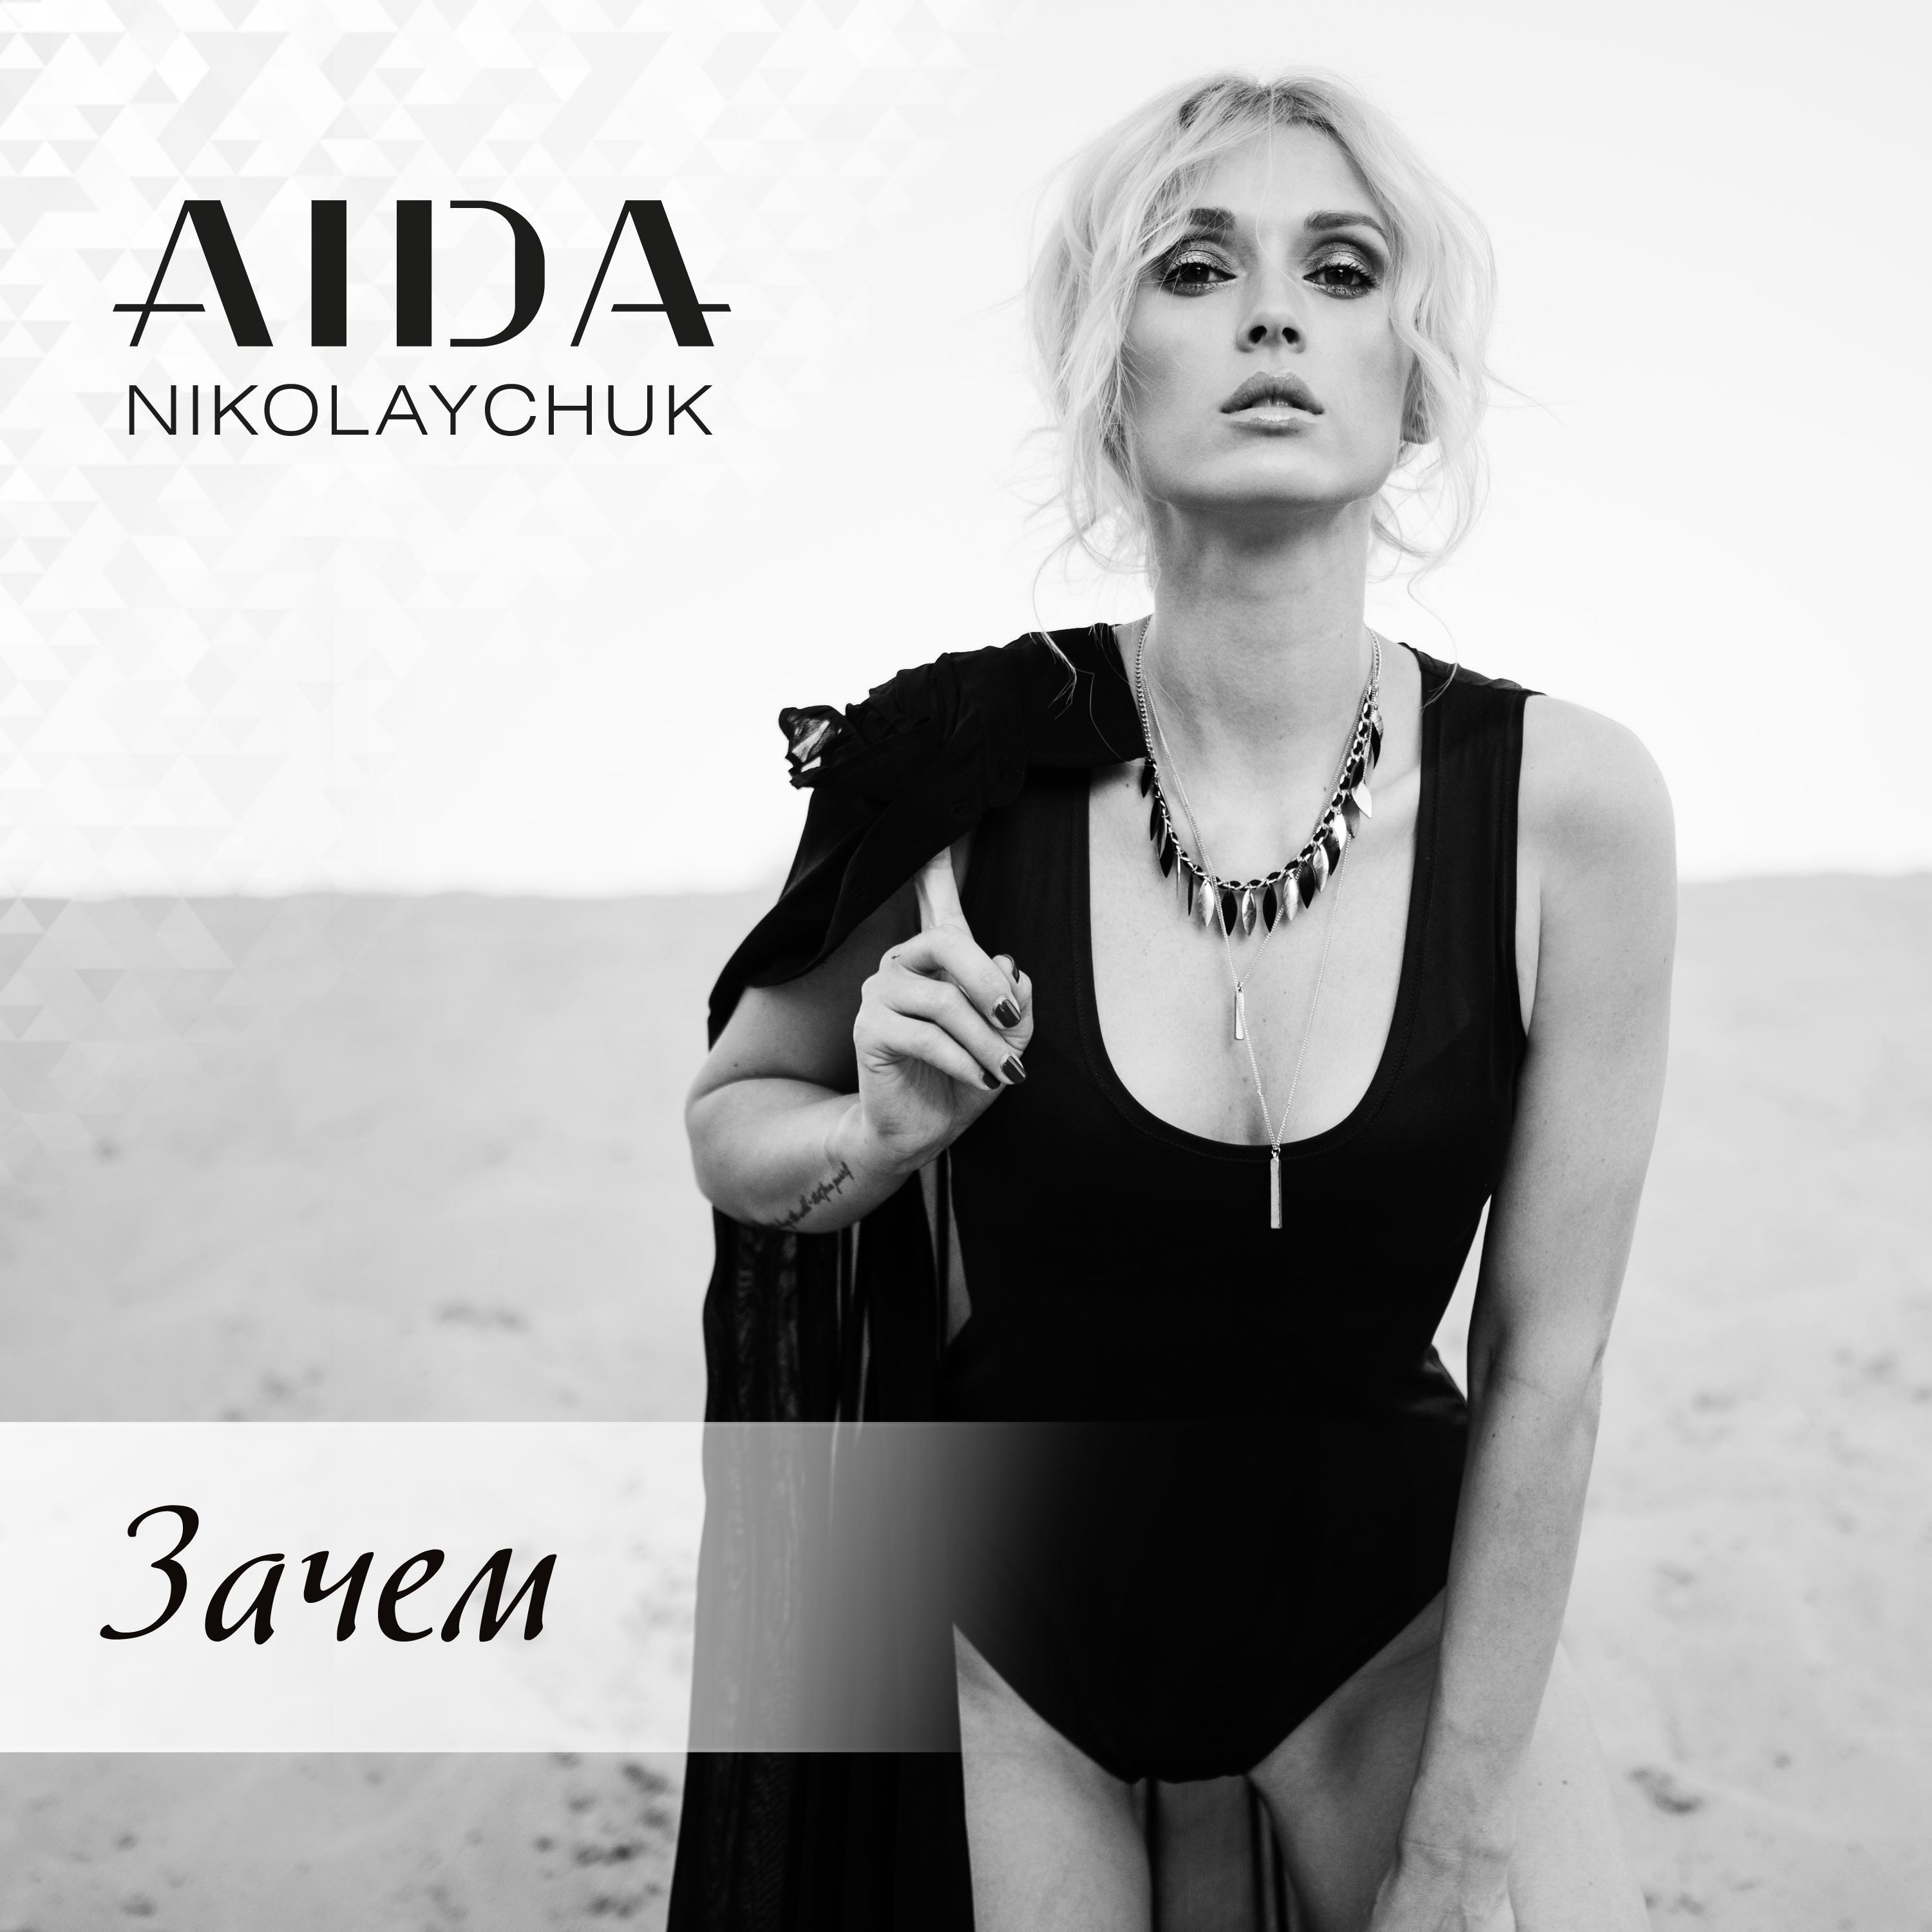 Aida nikolaychuk net worth.